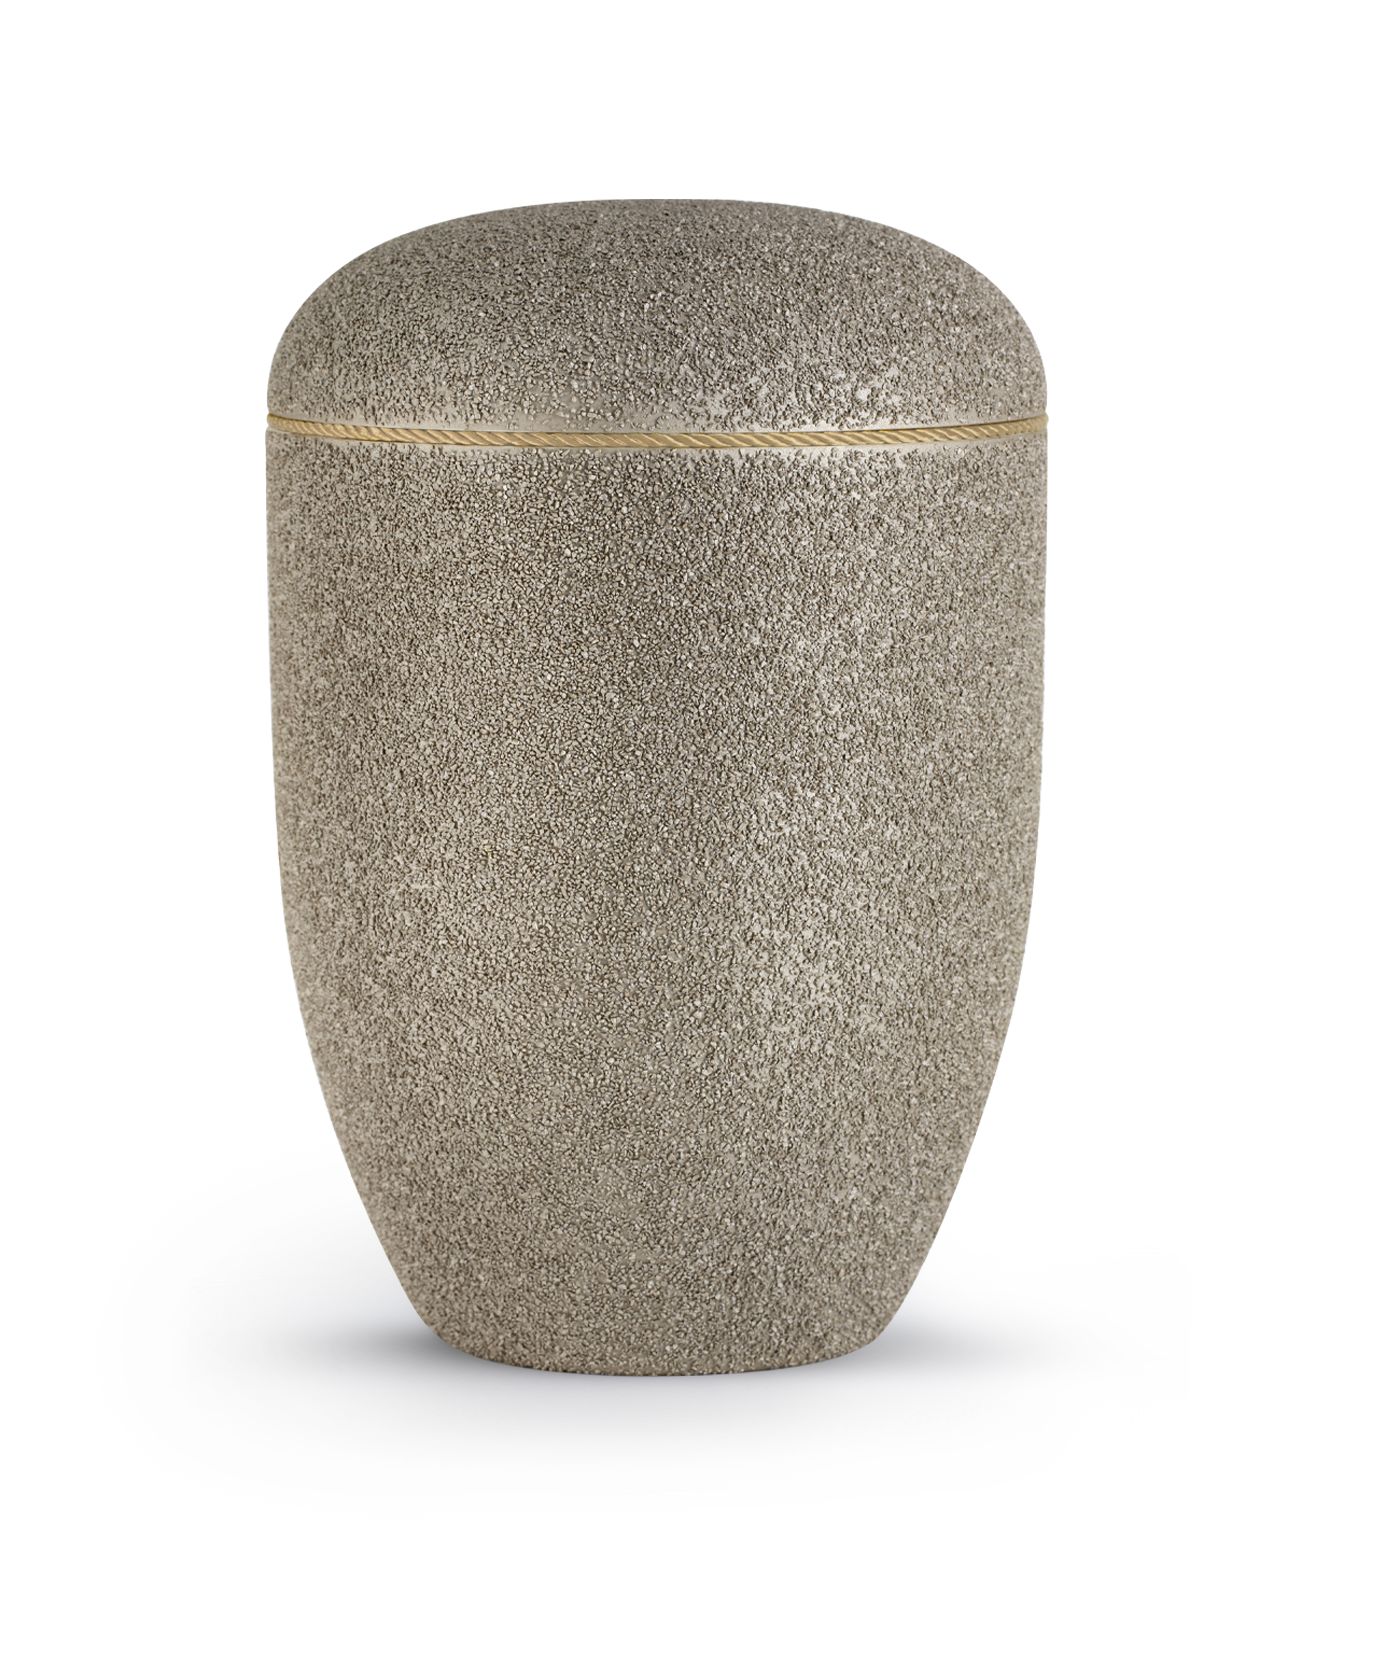 Völsing urn Edition Sorra coated with sand